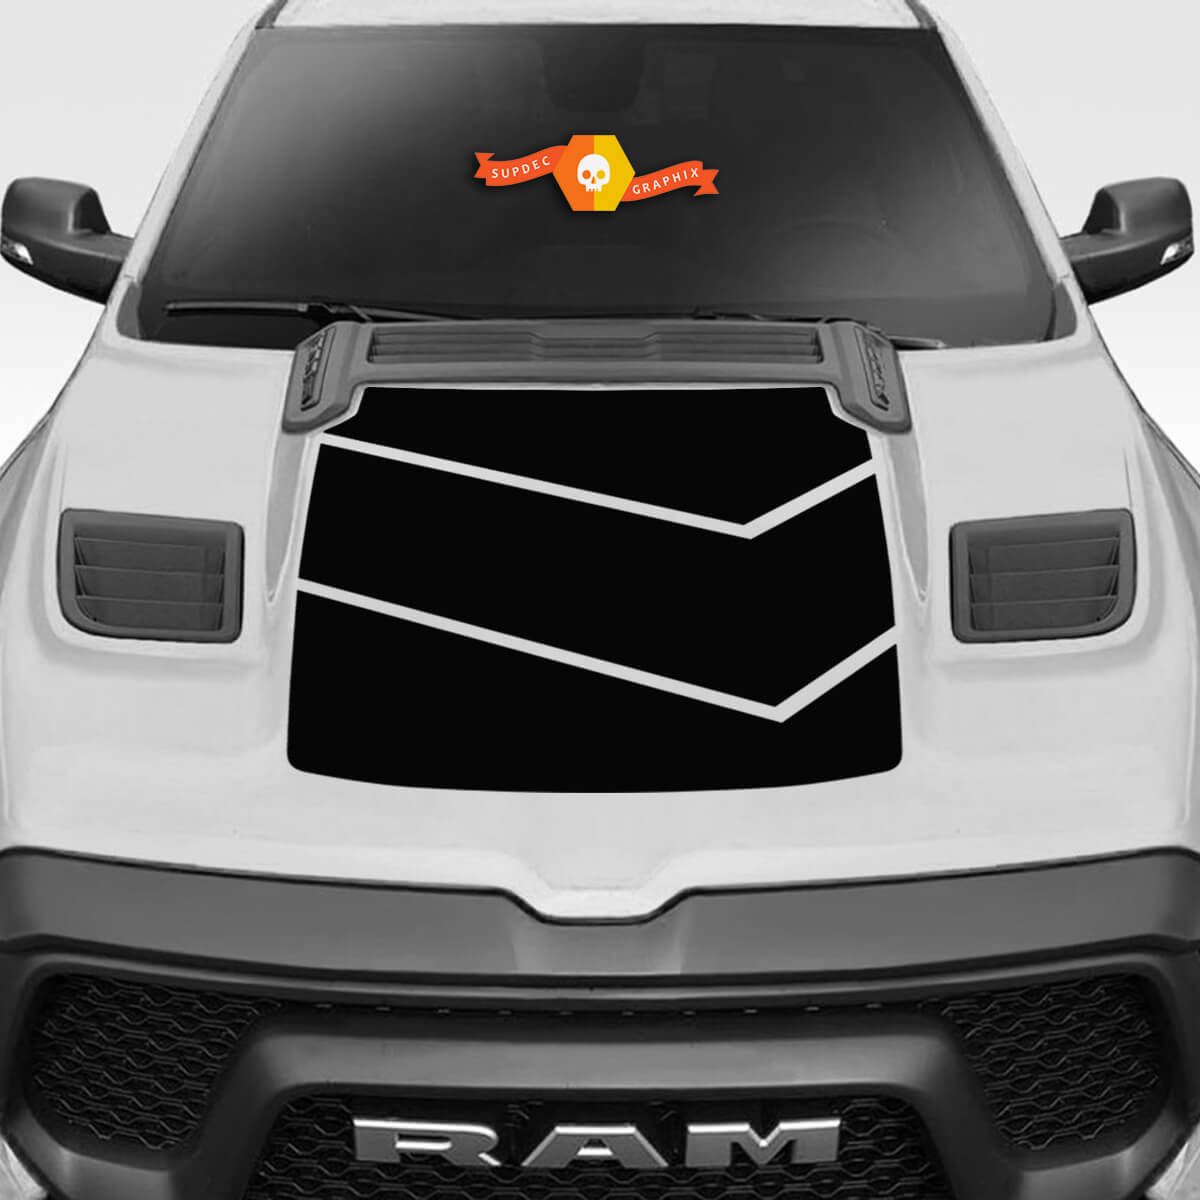 Dodge Ram Rebel 2019 2020 2021 2022 Hood Vinyl Decal Sticker Graphic Kit